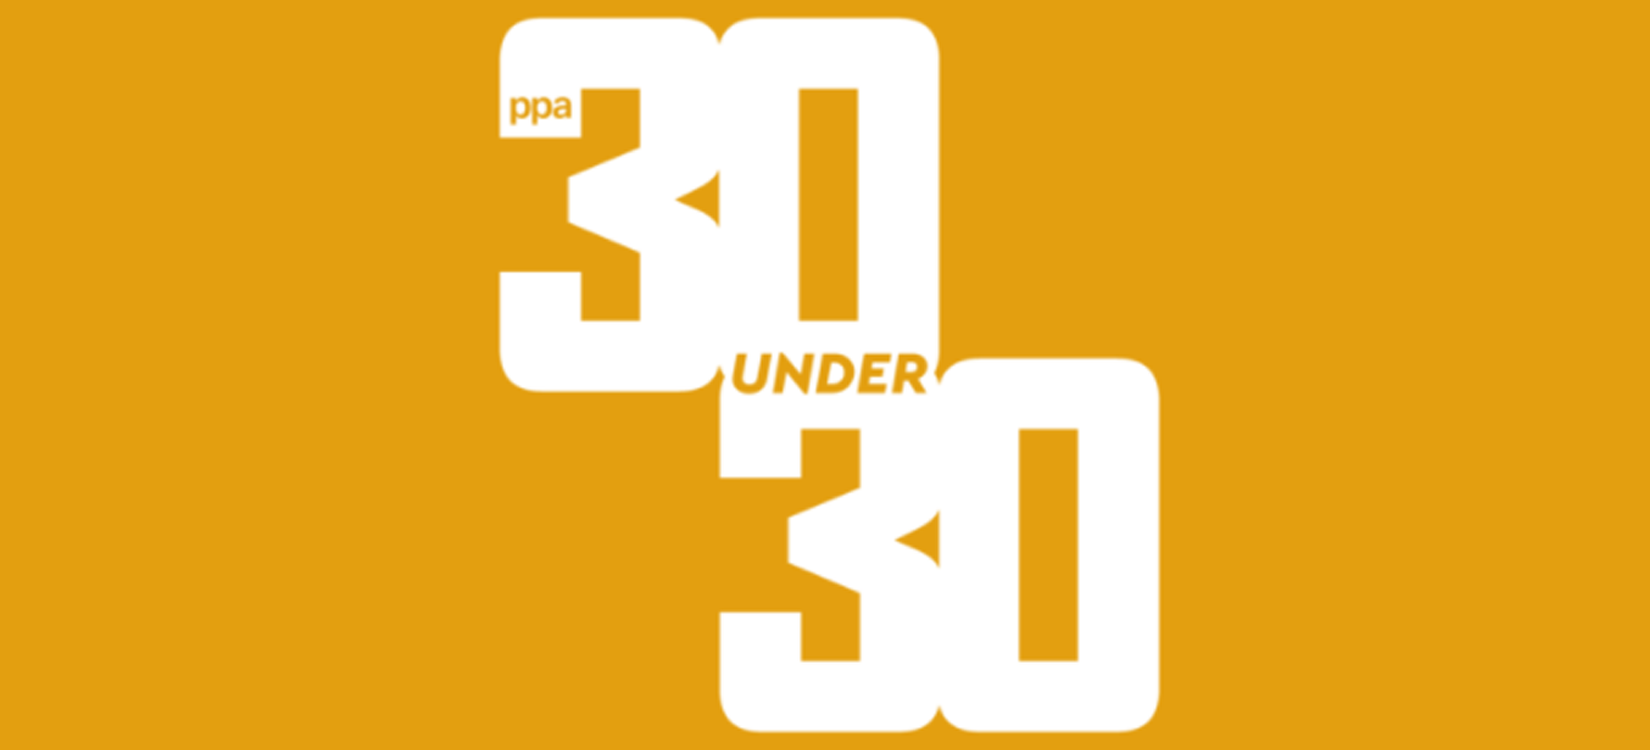 30 under 30 PPA